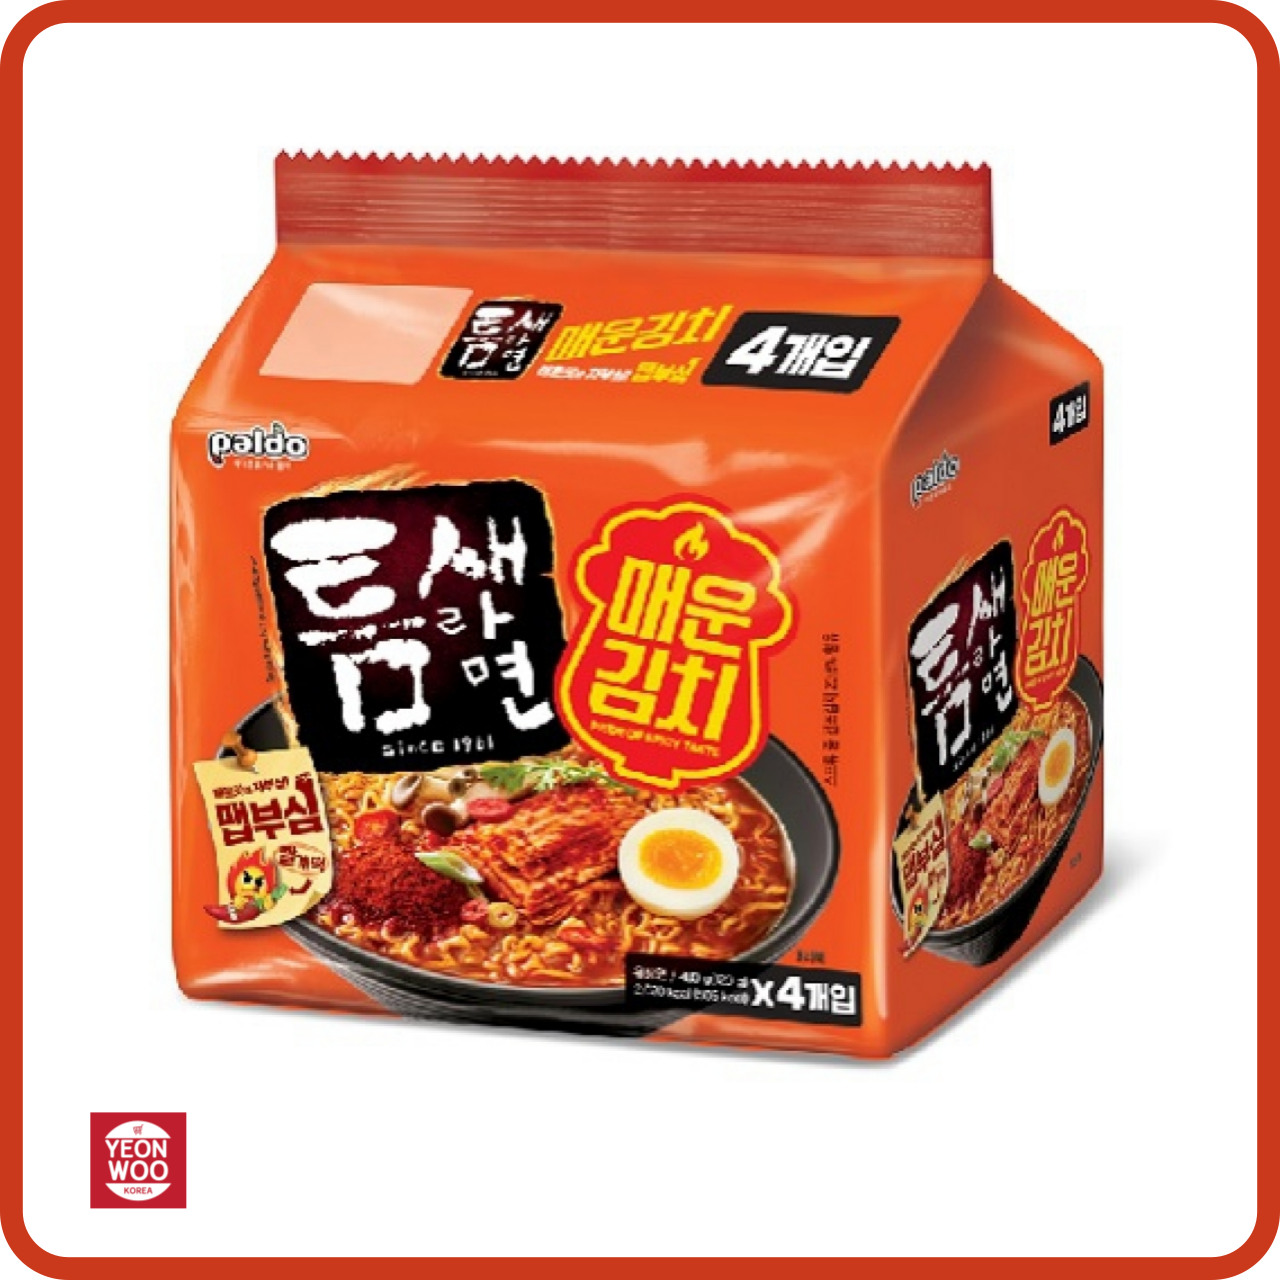 Paldo Korean Extra Spicy Ramen Teumsae Kimchi Ramen 480g